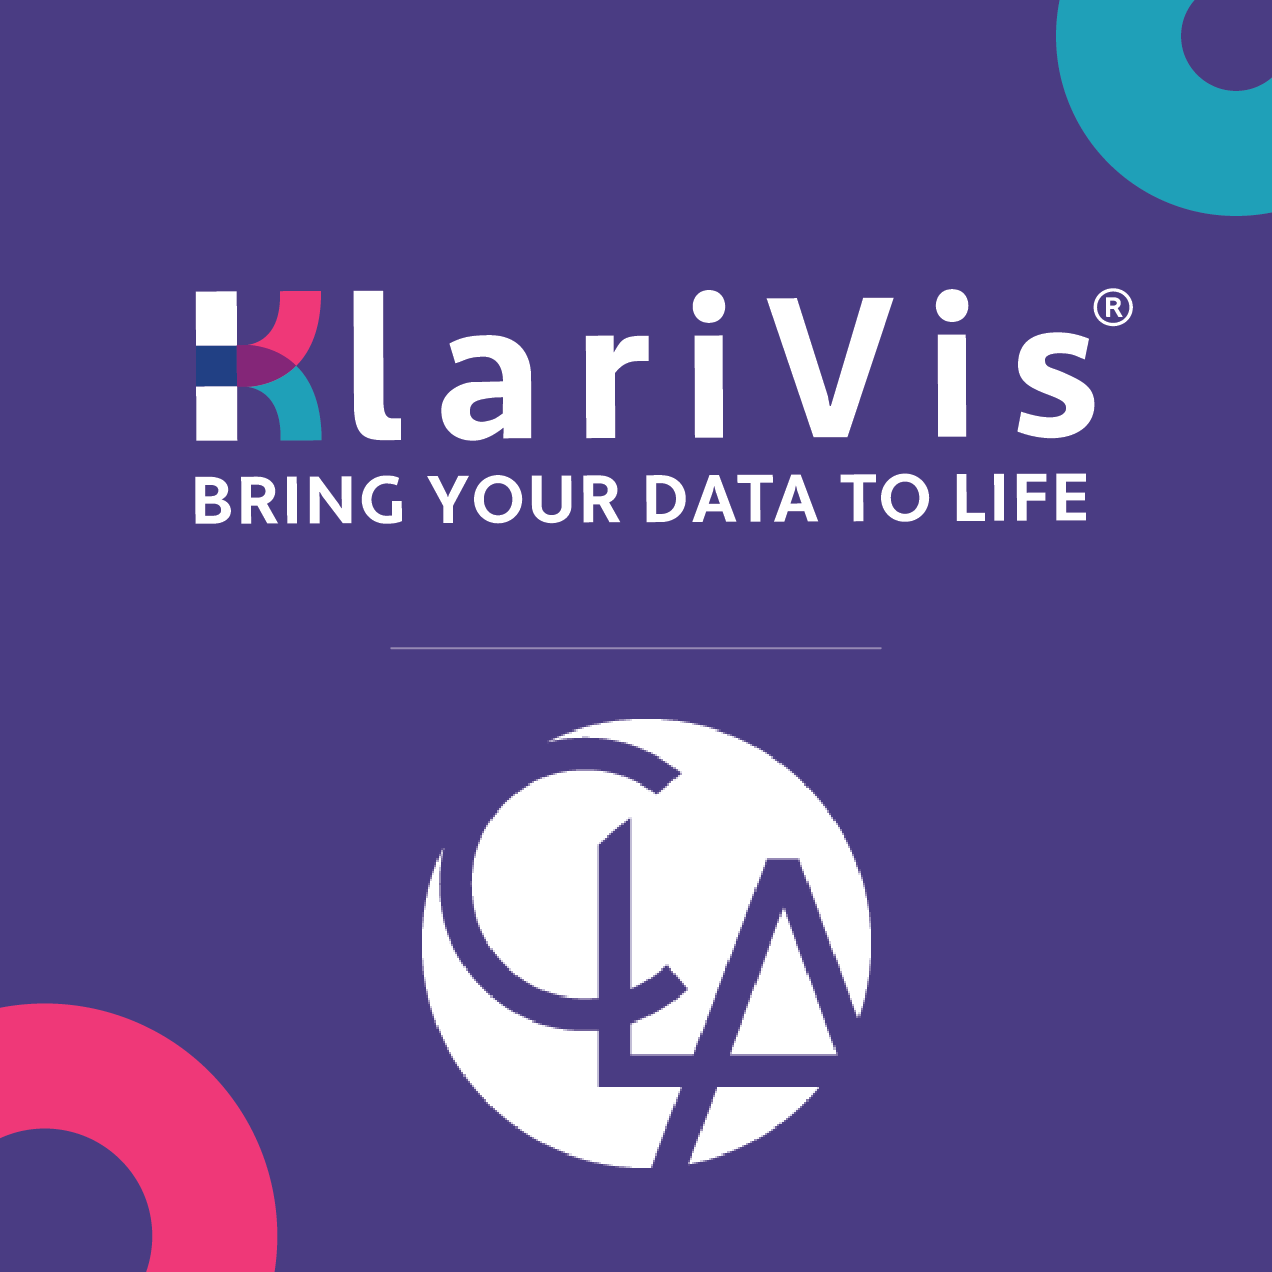 Klarivis Partners with CLA